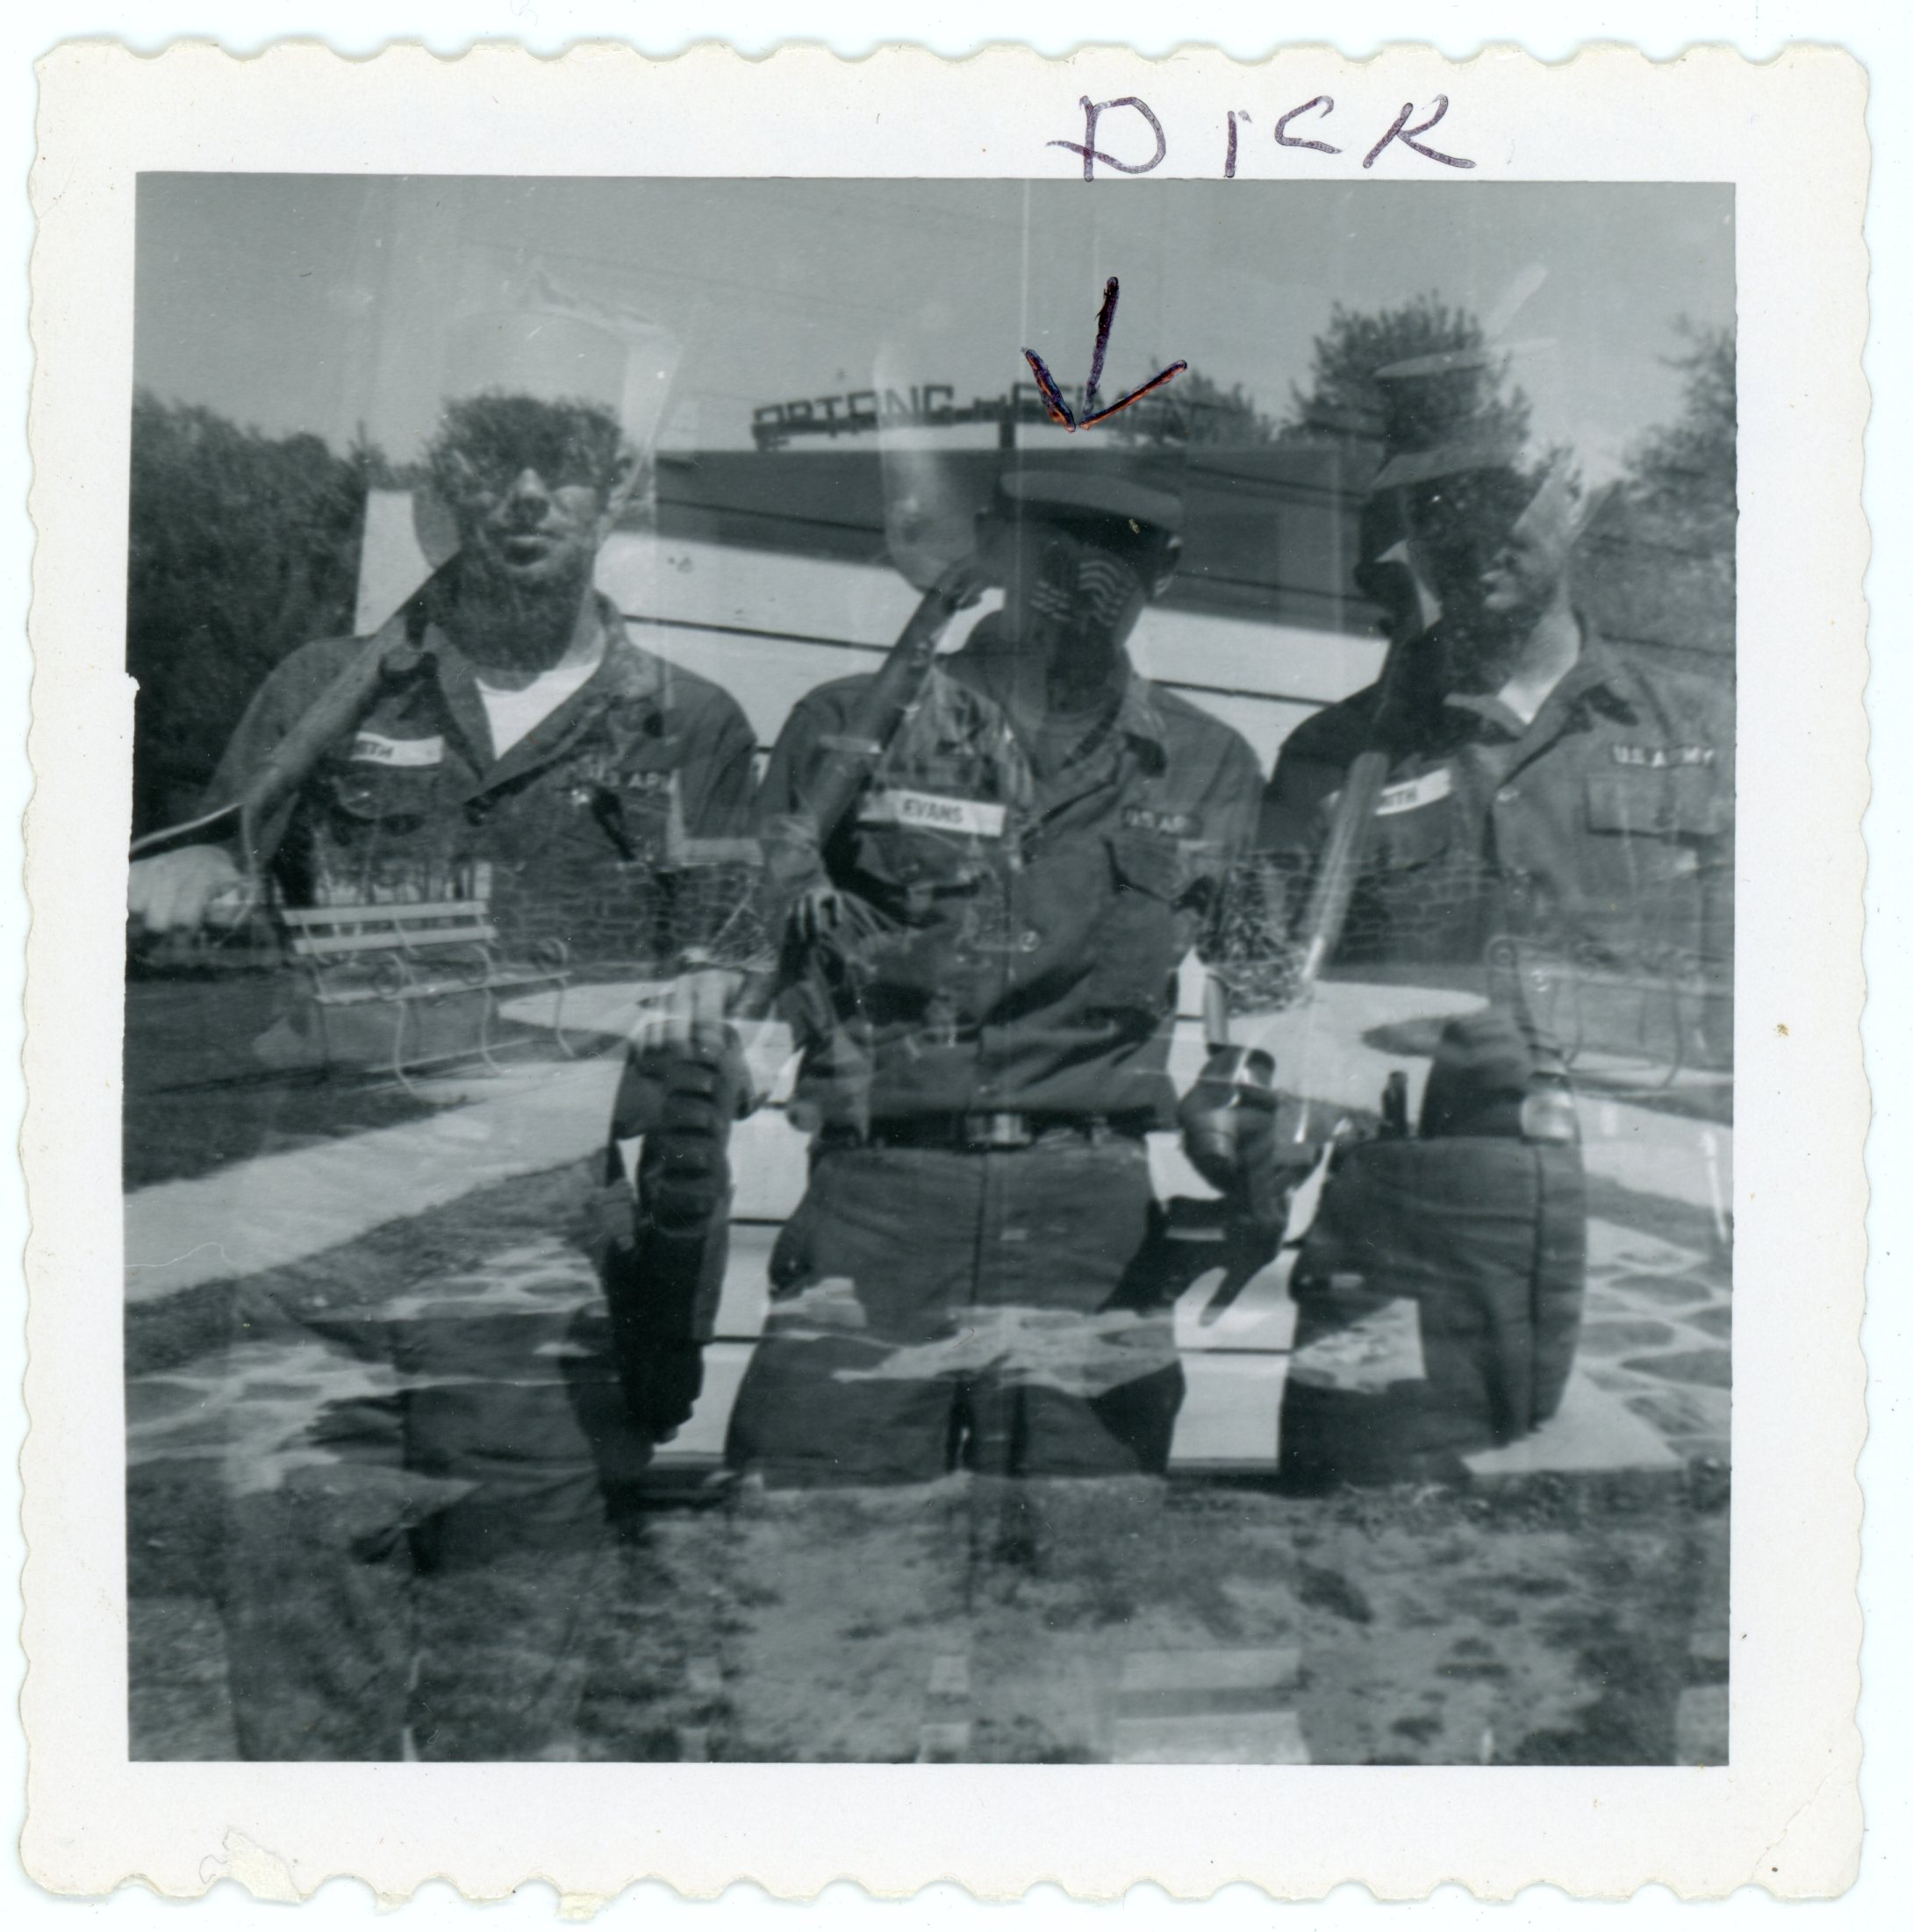 Vintage dick photos pics